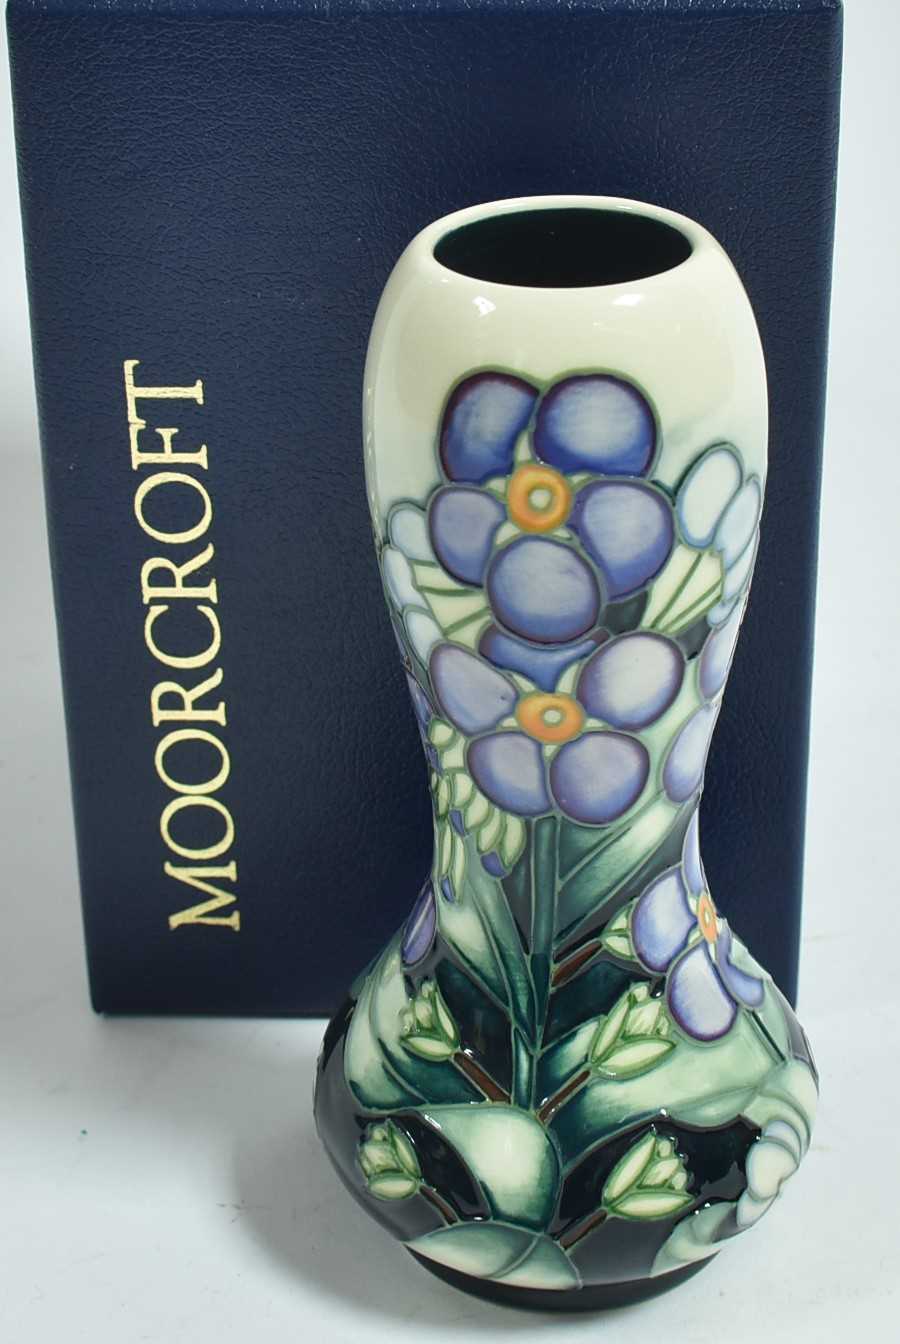 Lot 538 - Moorcroft vase